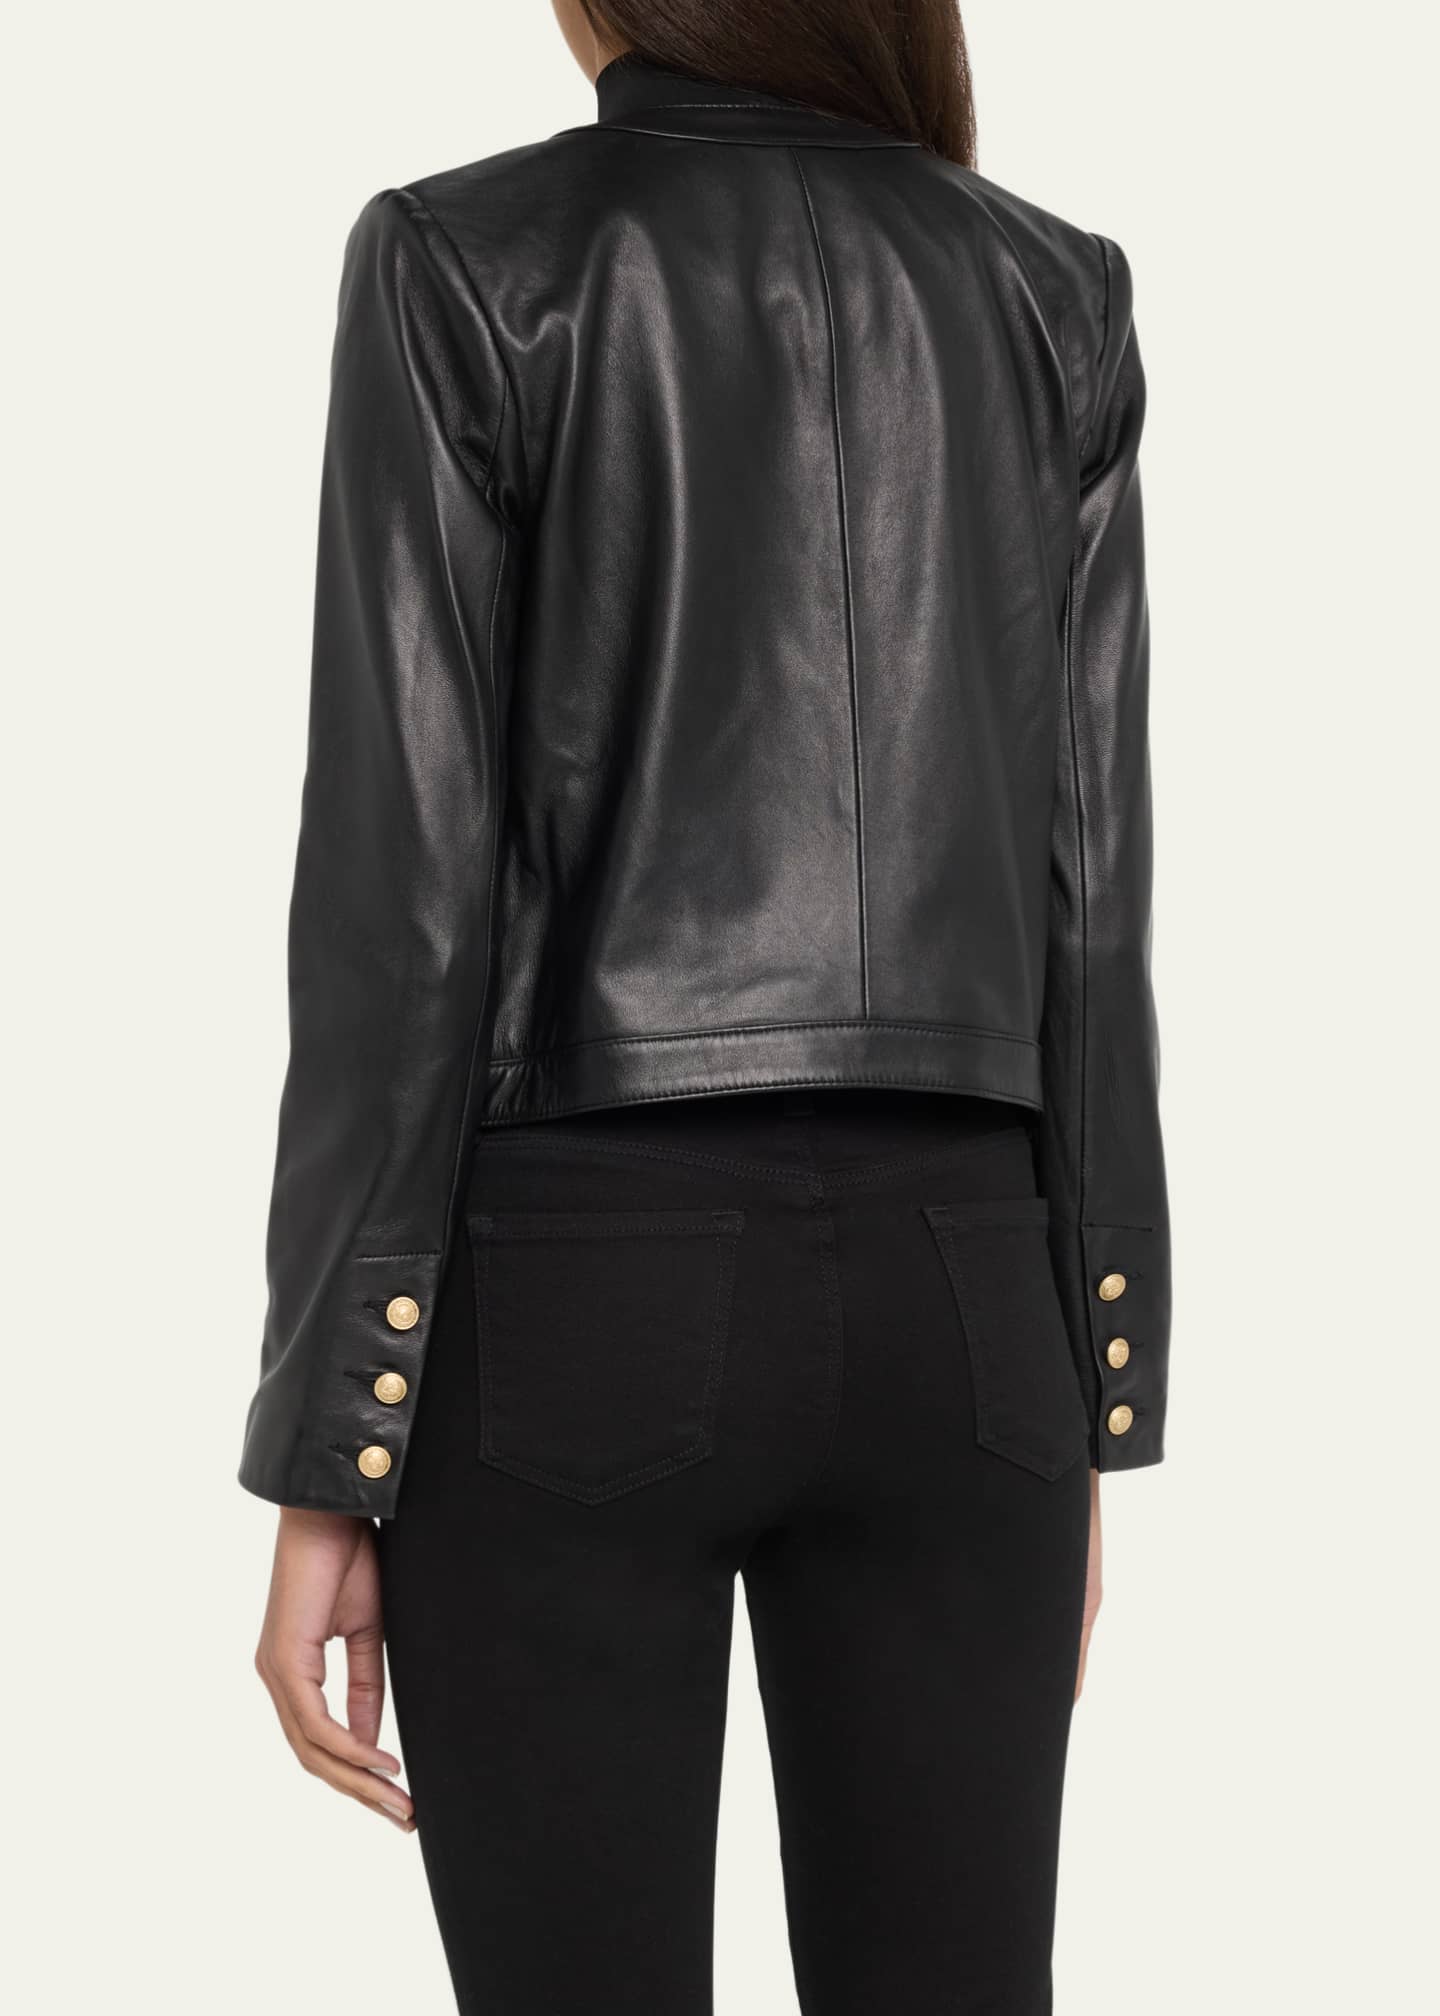 Collarless Leather Jacket